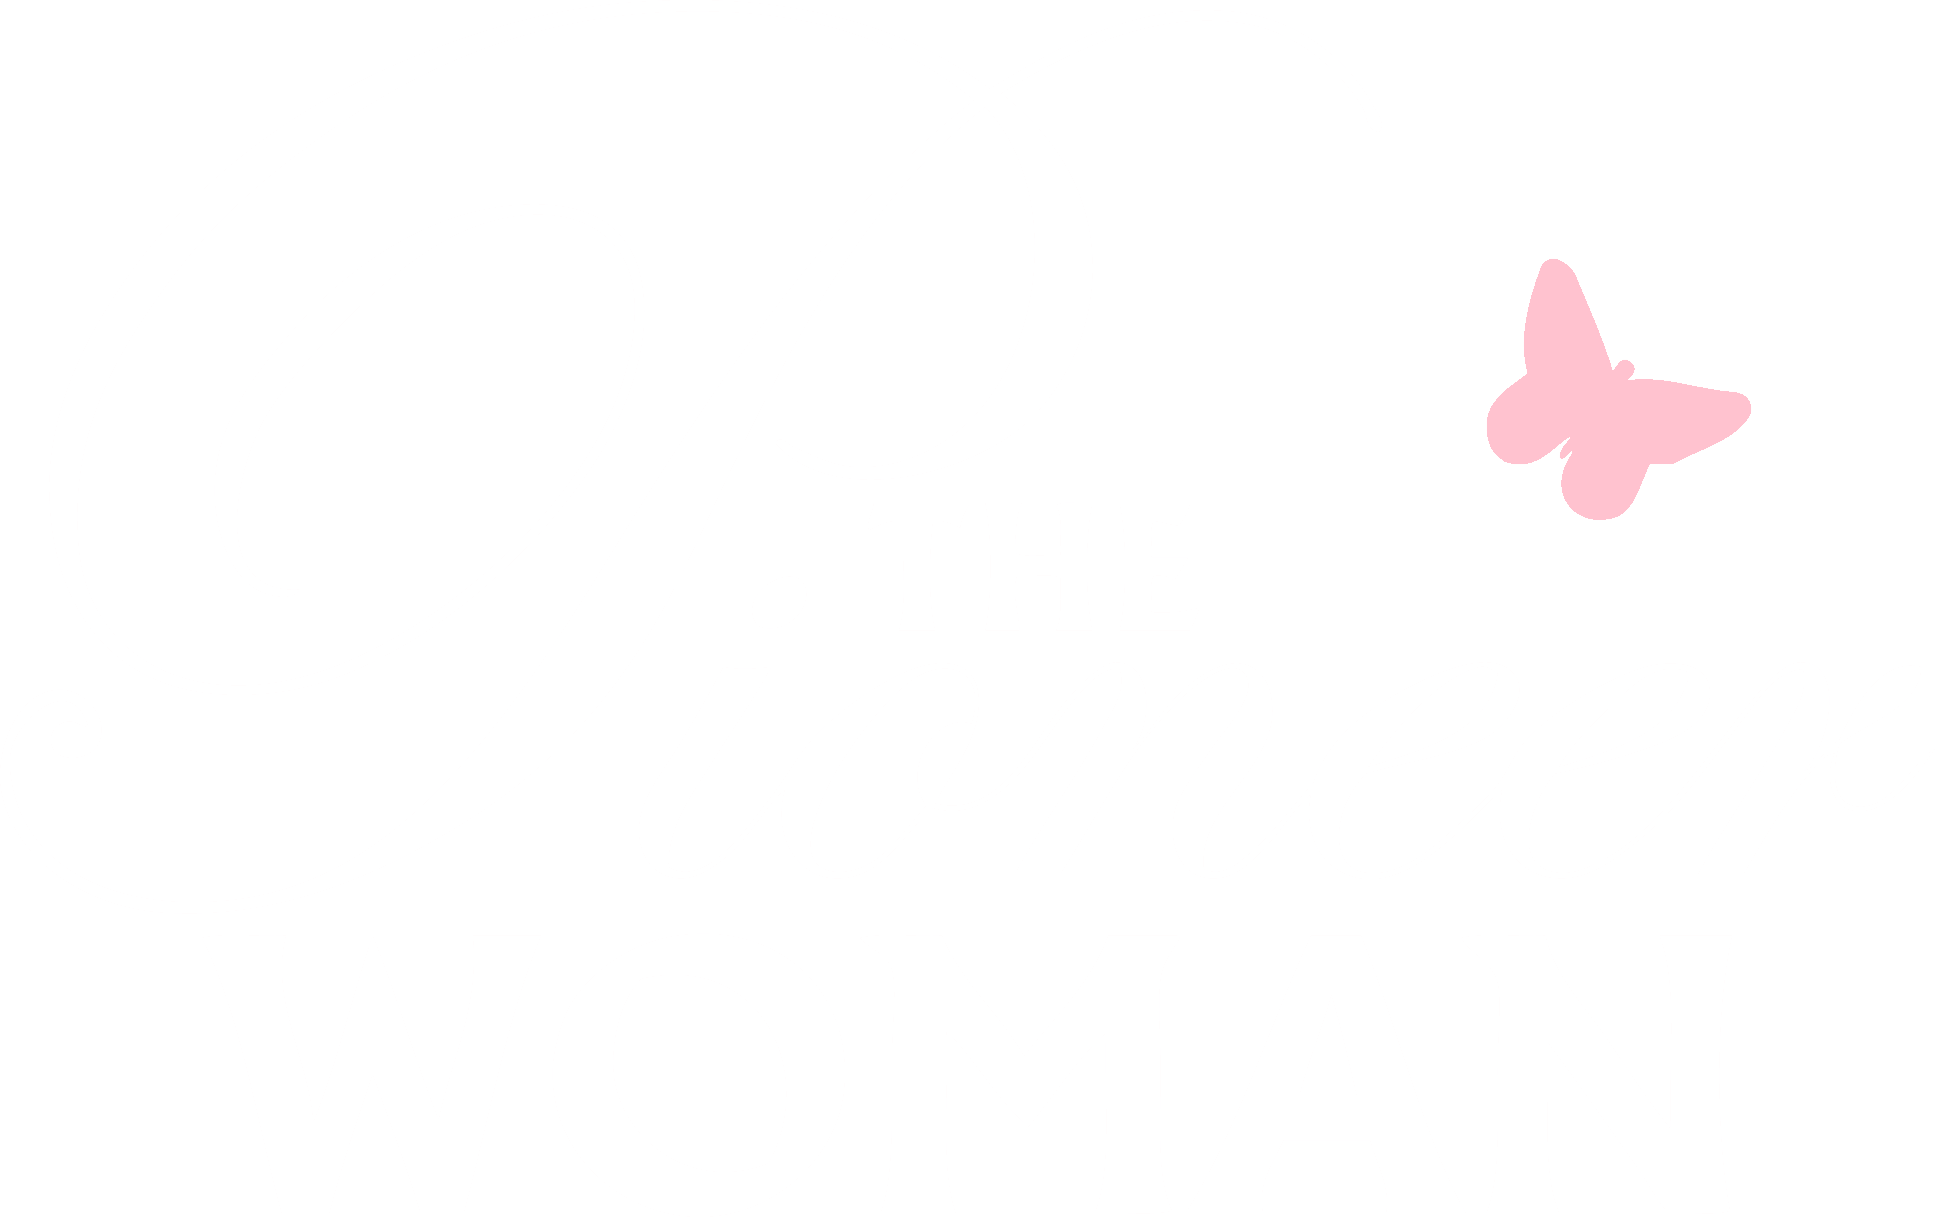 The Pioneer Woman logo